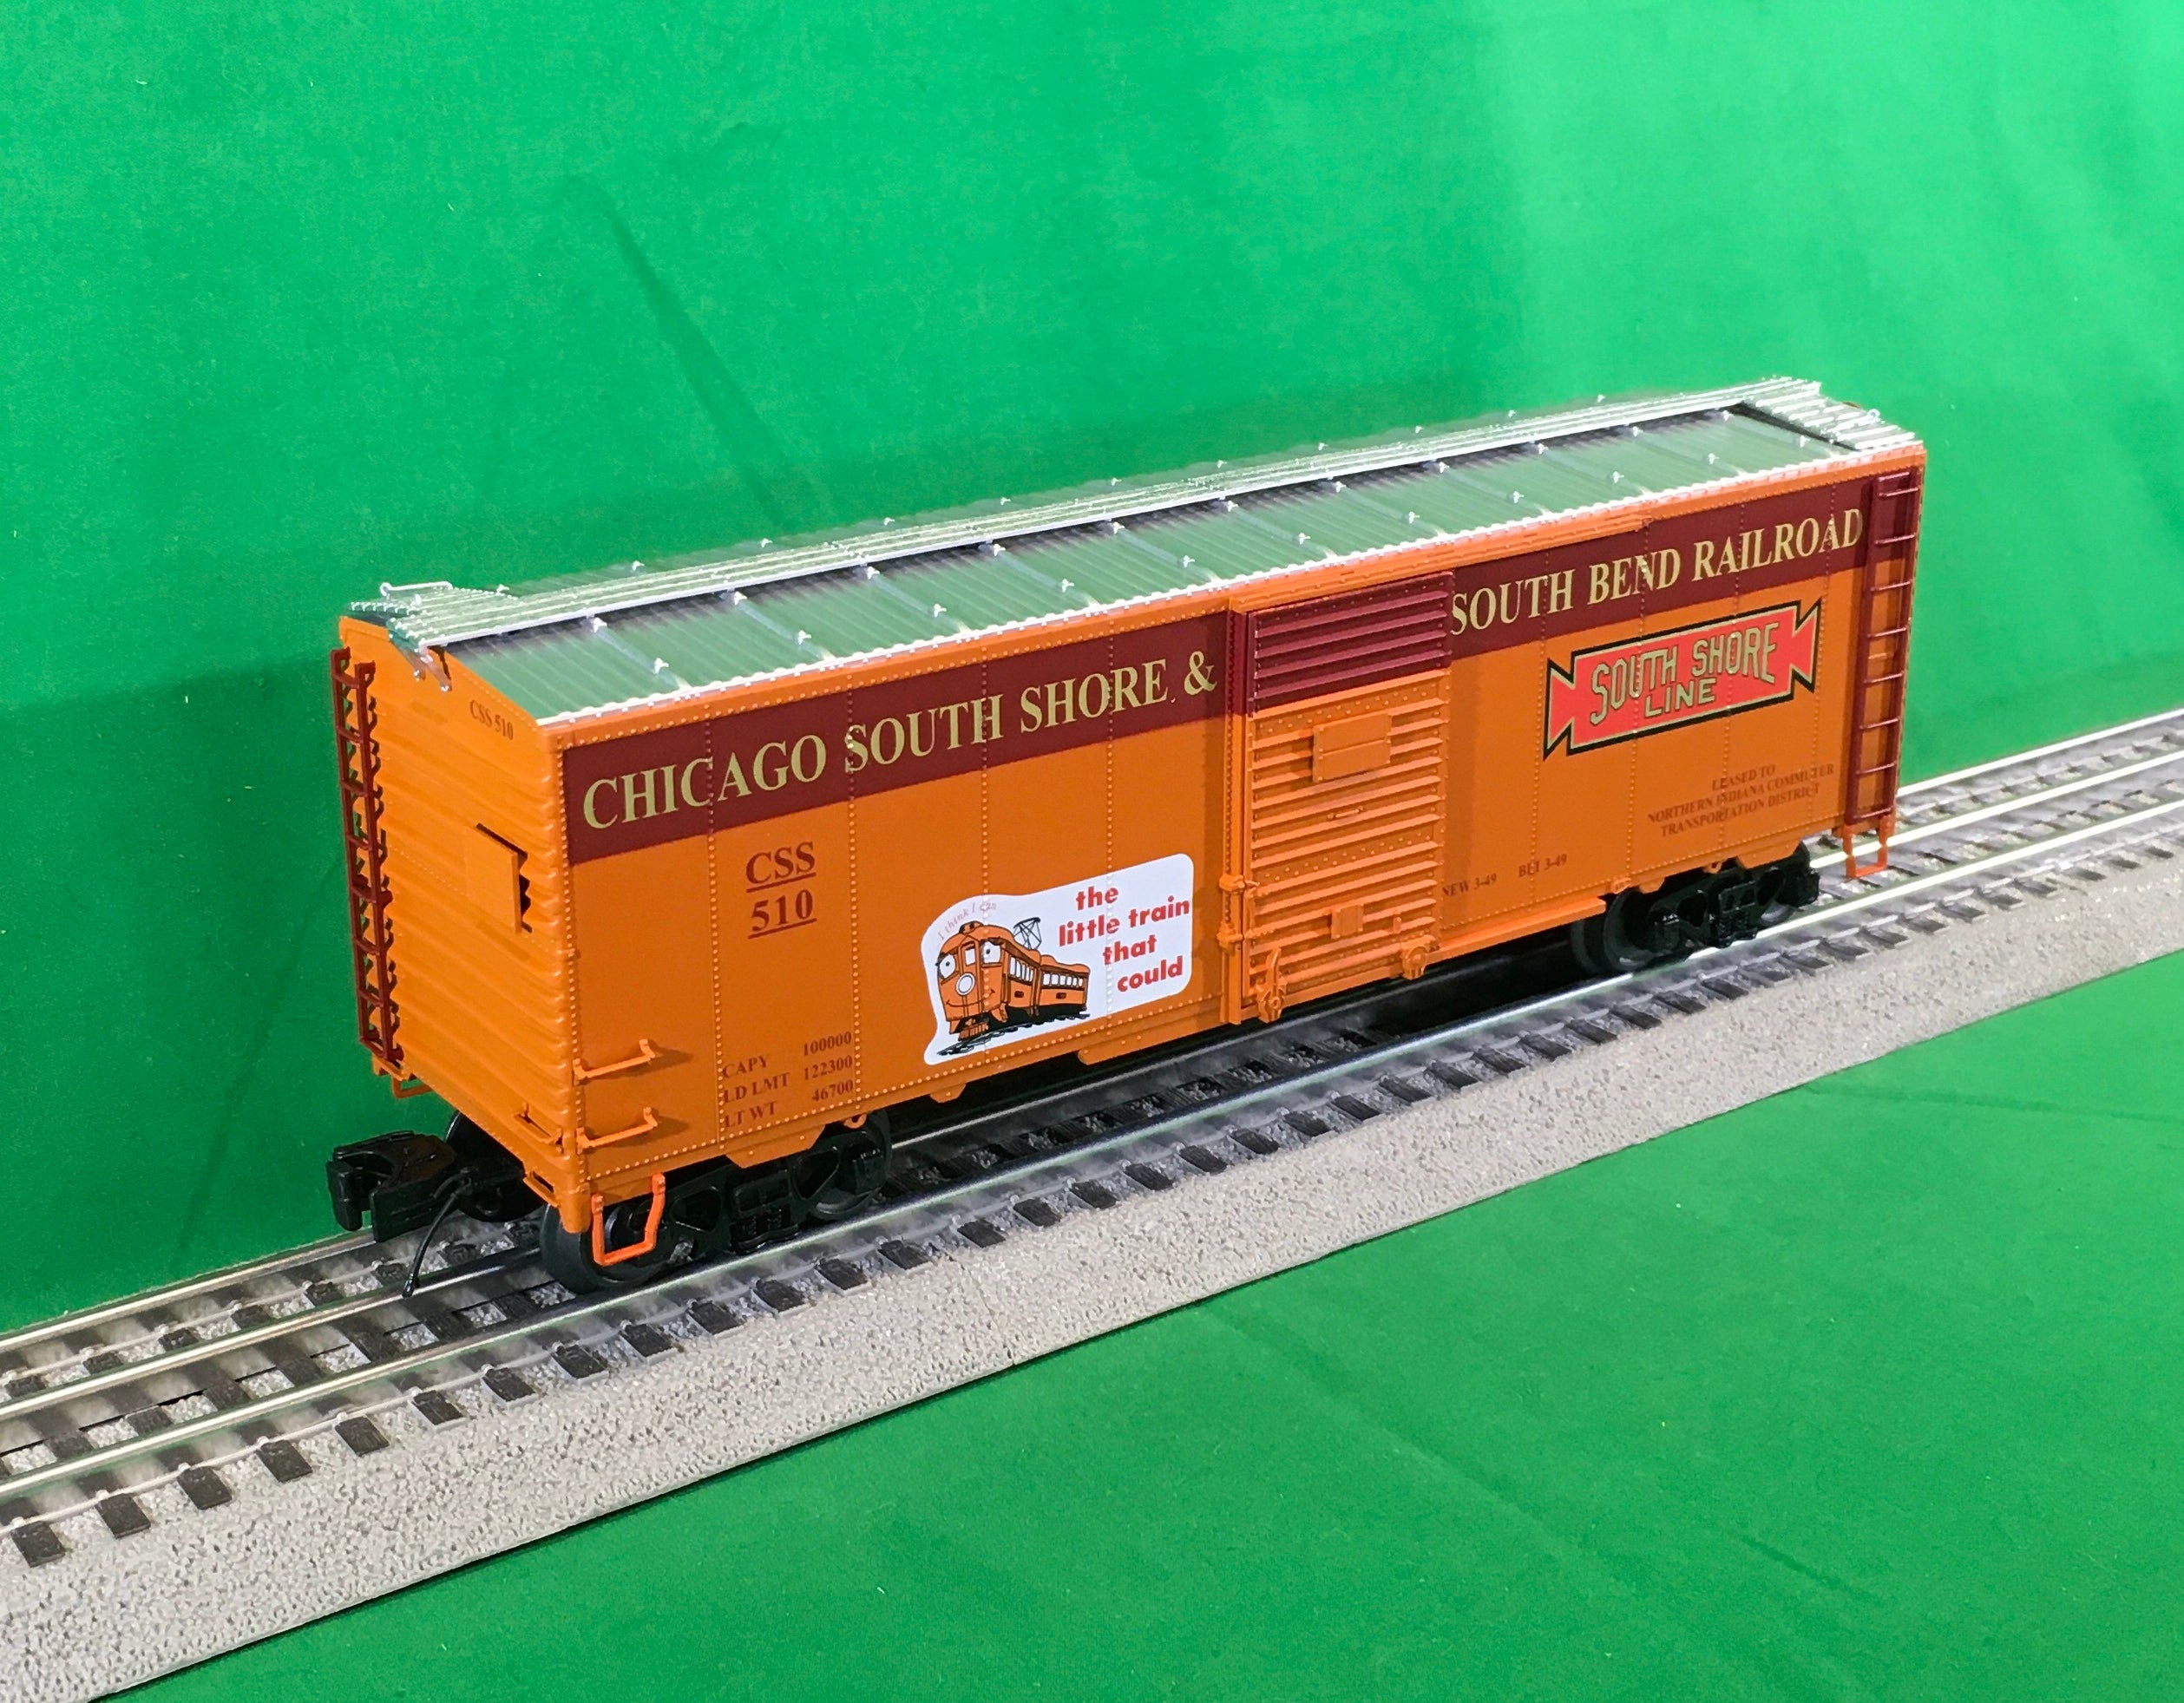 MTH 20-99414 - 40' AAR Box Car "Chicago South Shore & South Bend Railroad" #510 - Custom Run for MrMuffin'sTrains